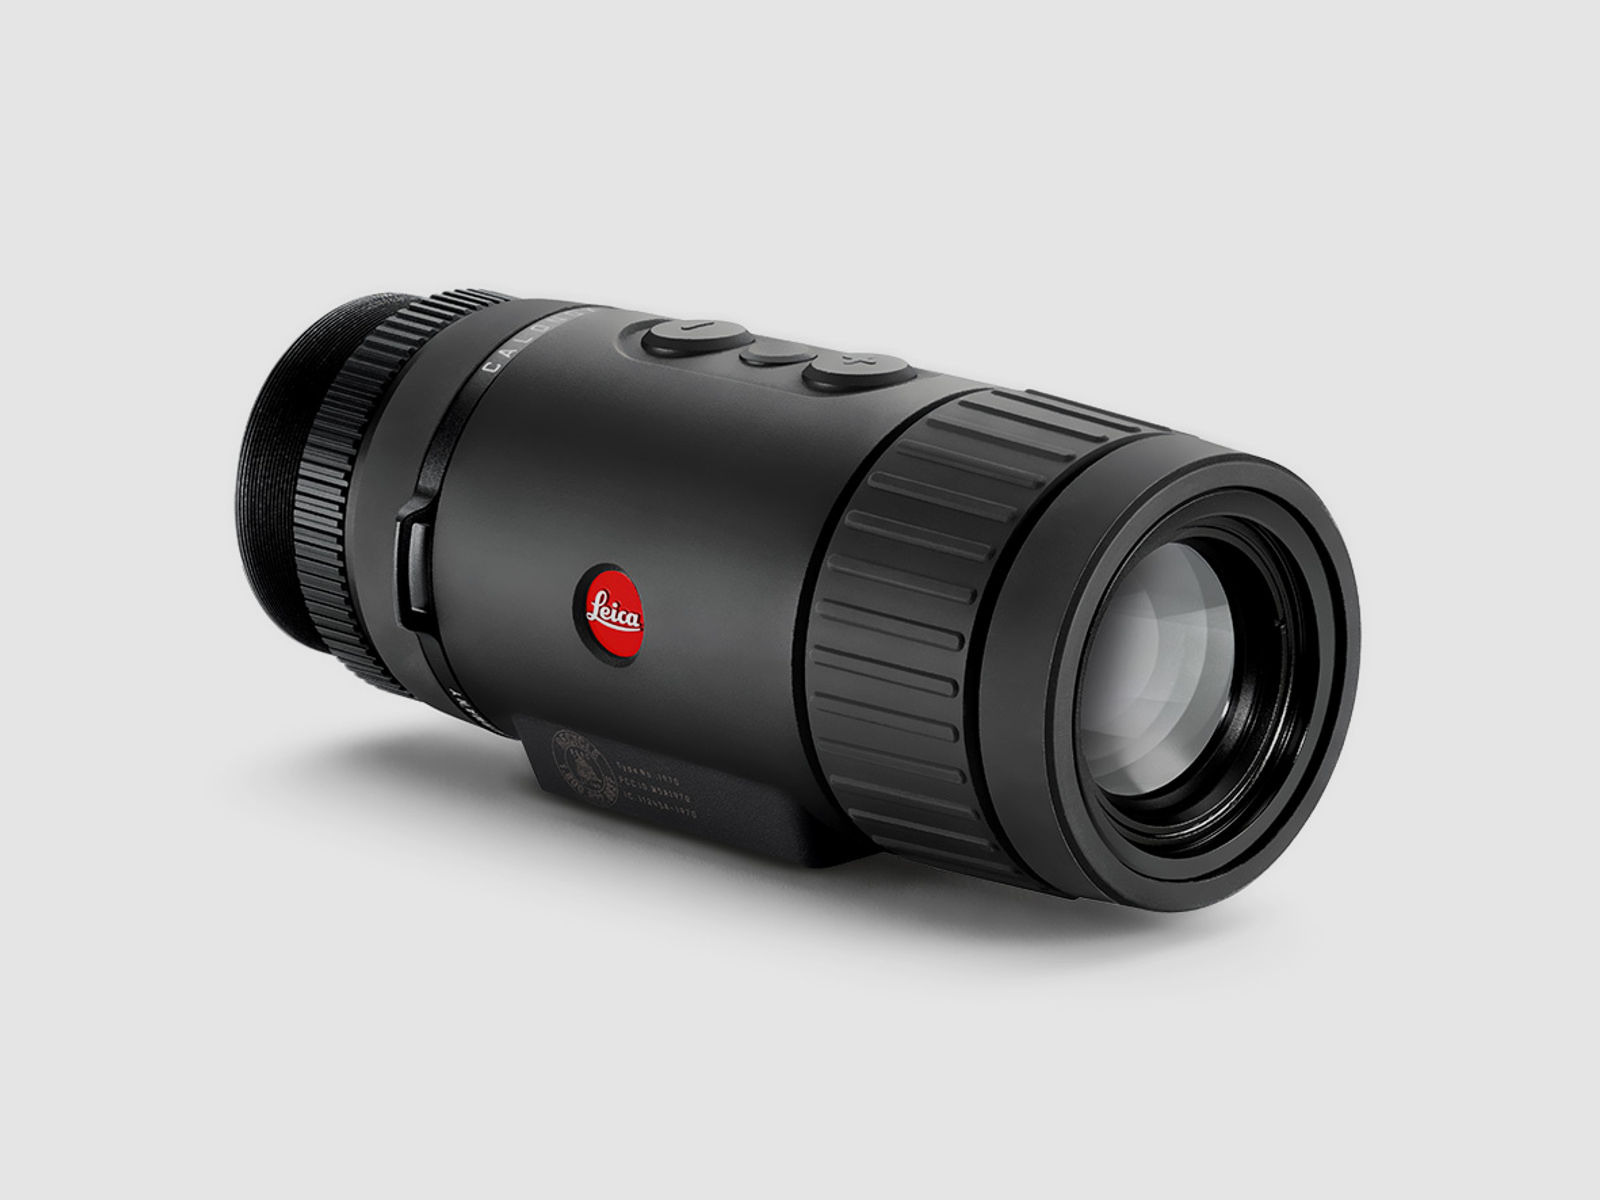 Leica Calonox Sight SE Wärmebildgerät / Vorsatzgerät